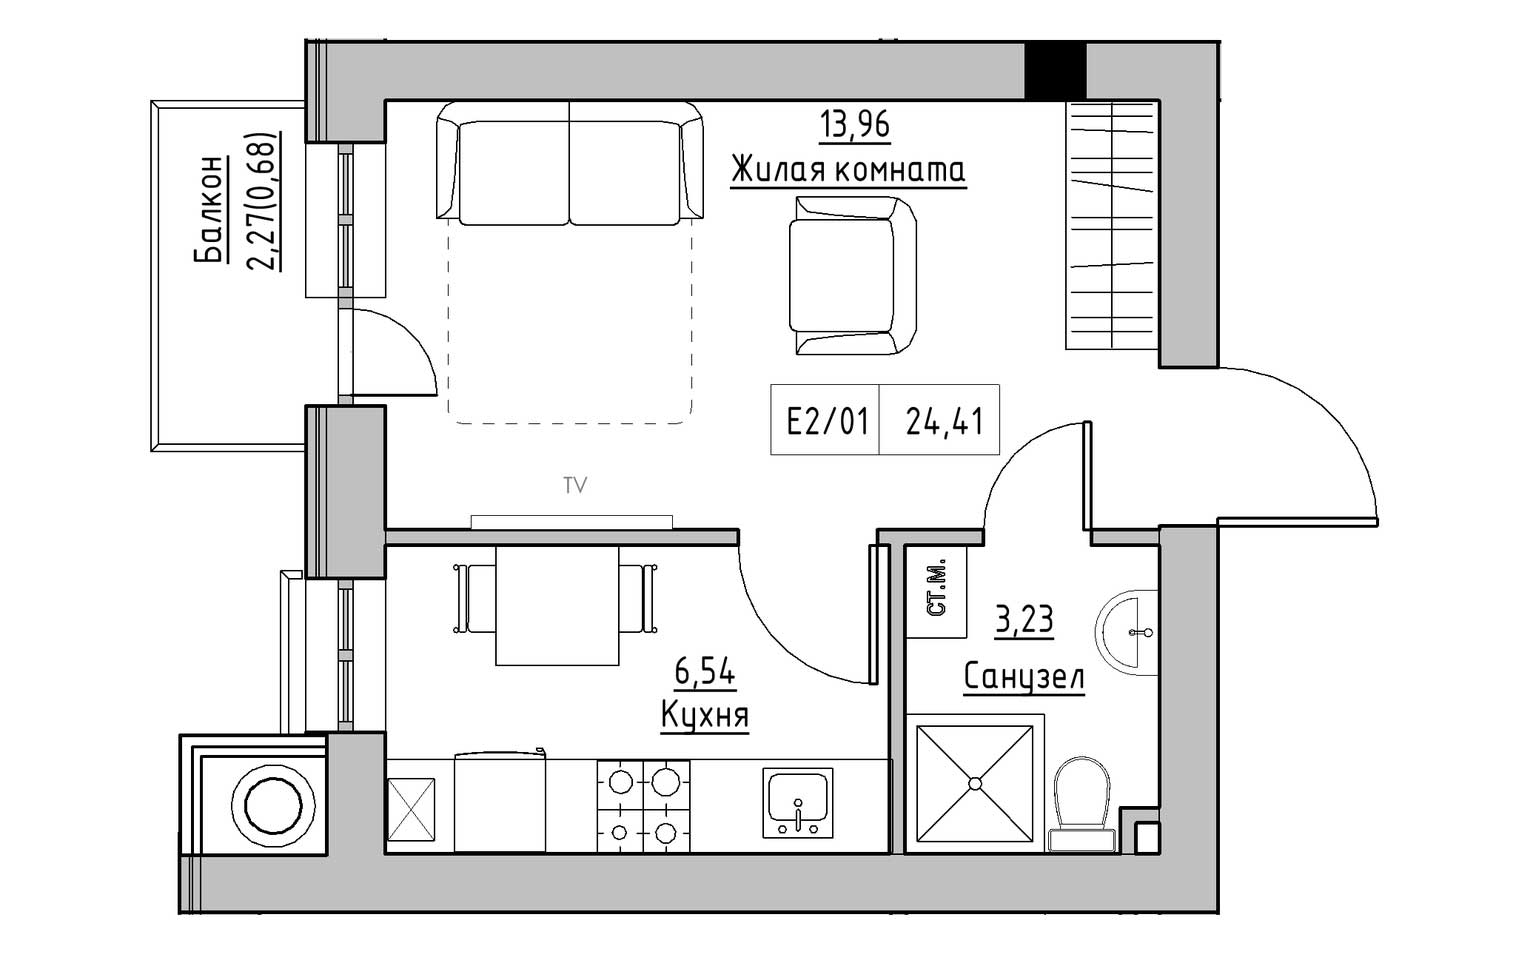 Planning 1-rm flats area 24.41m2, KS-009-02/0005.